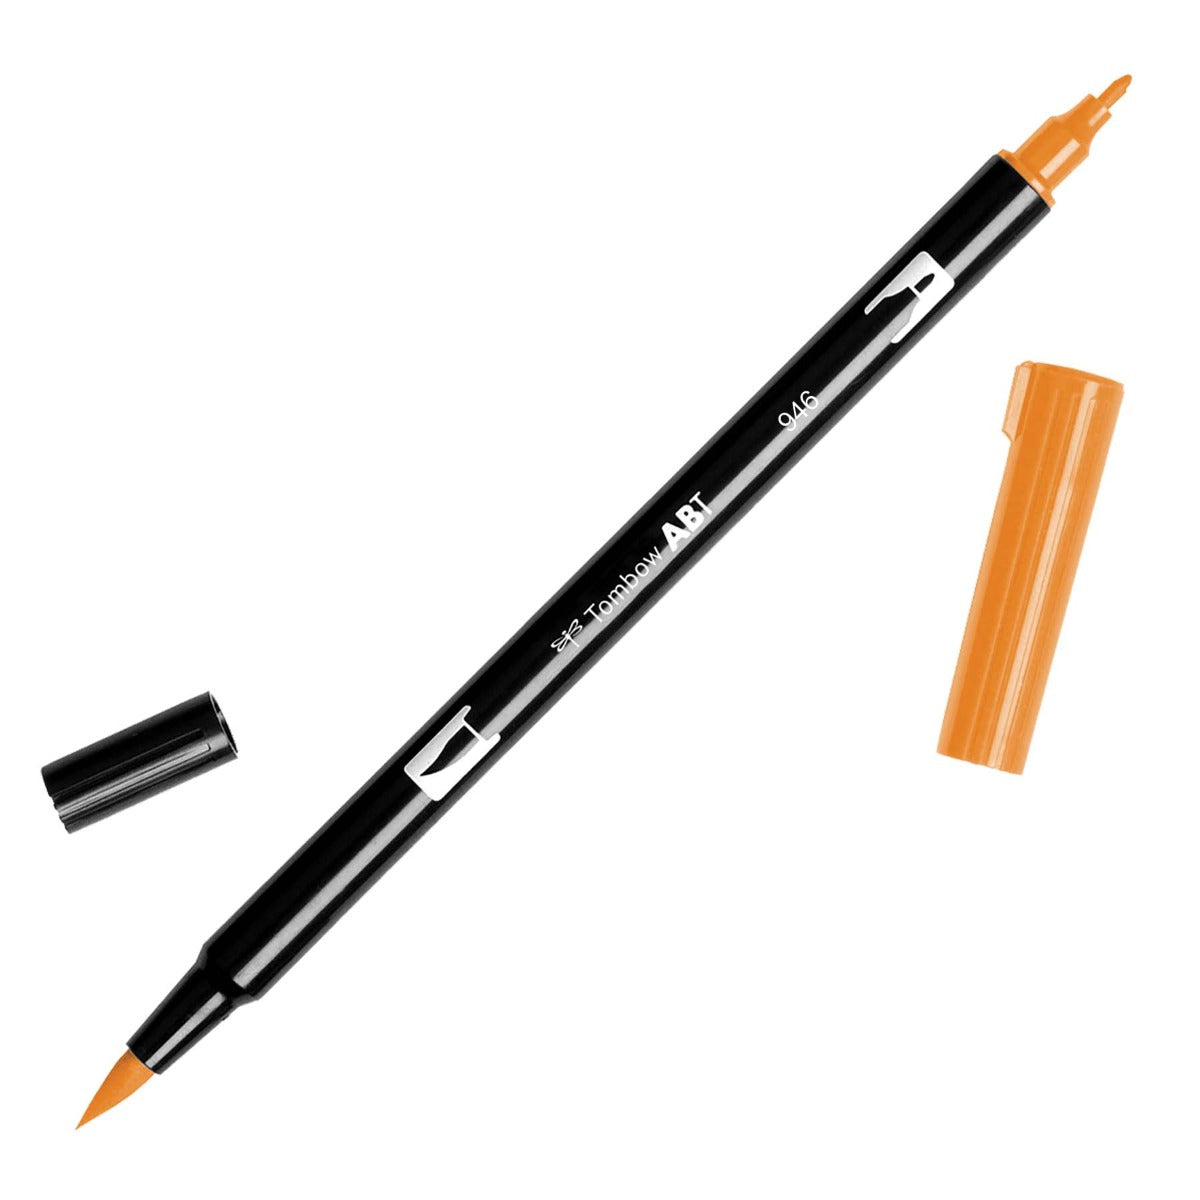 TOMBOW ABT Dual Brush Pen (96 Colors) LIST 9/11